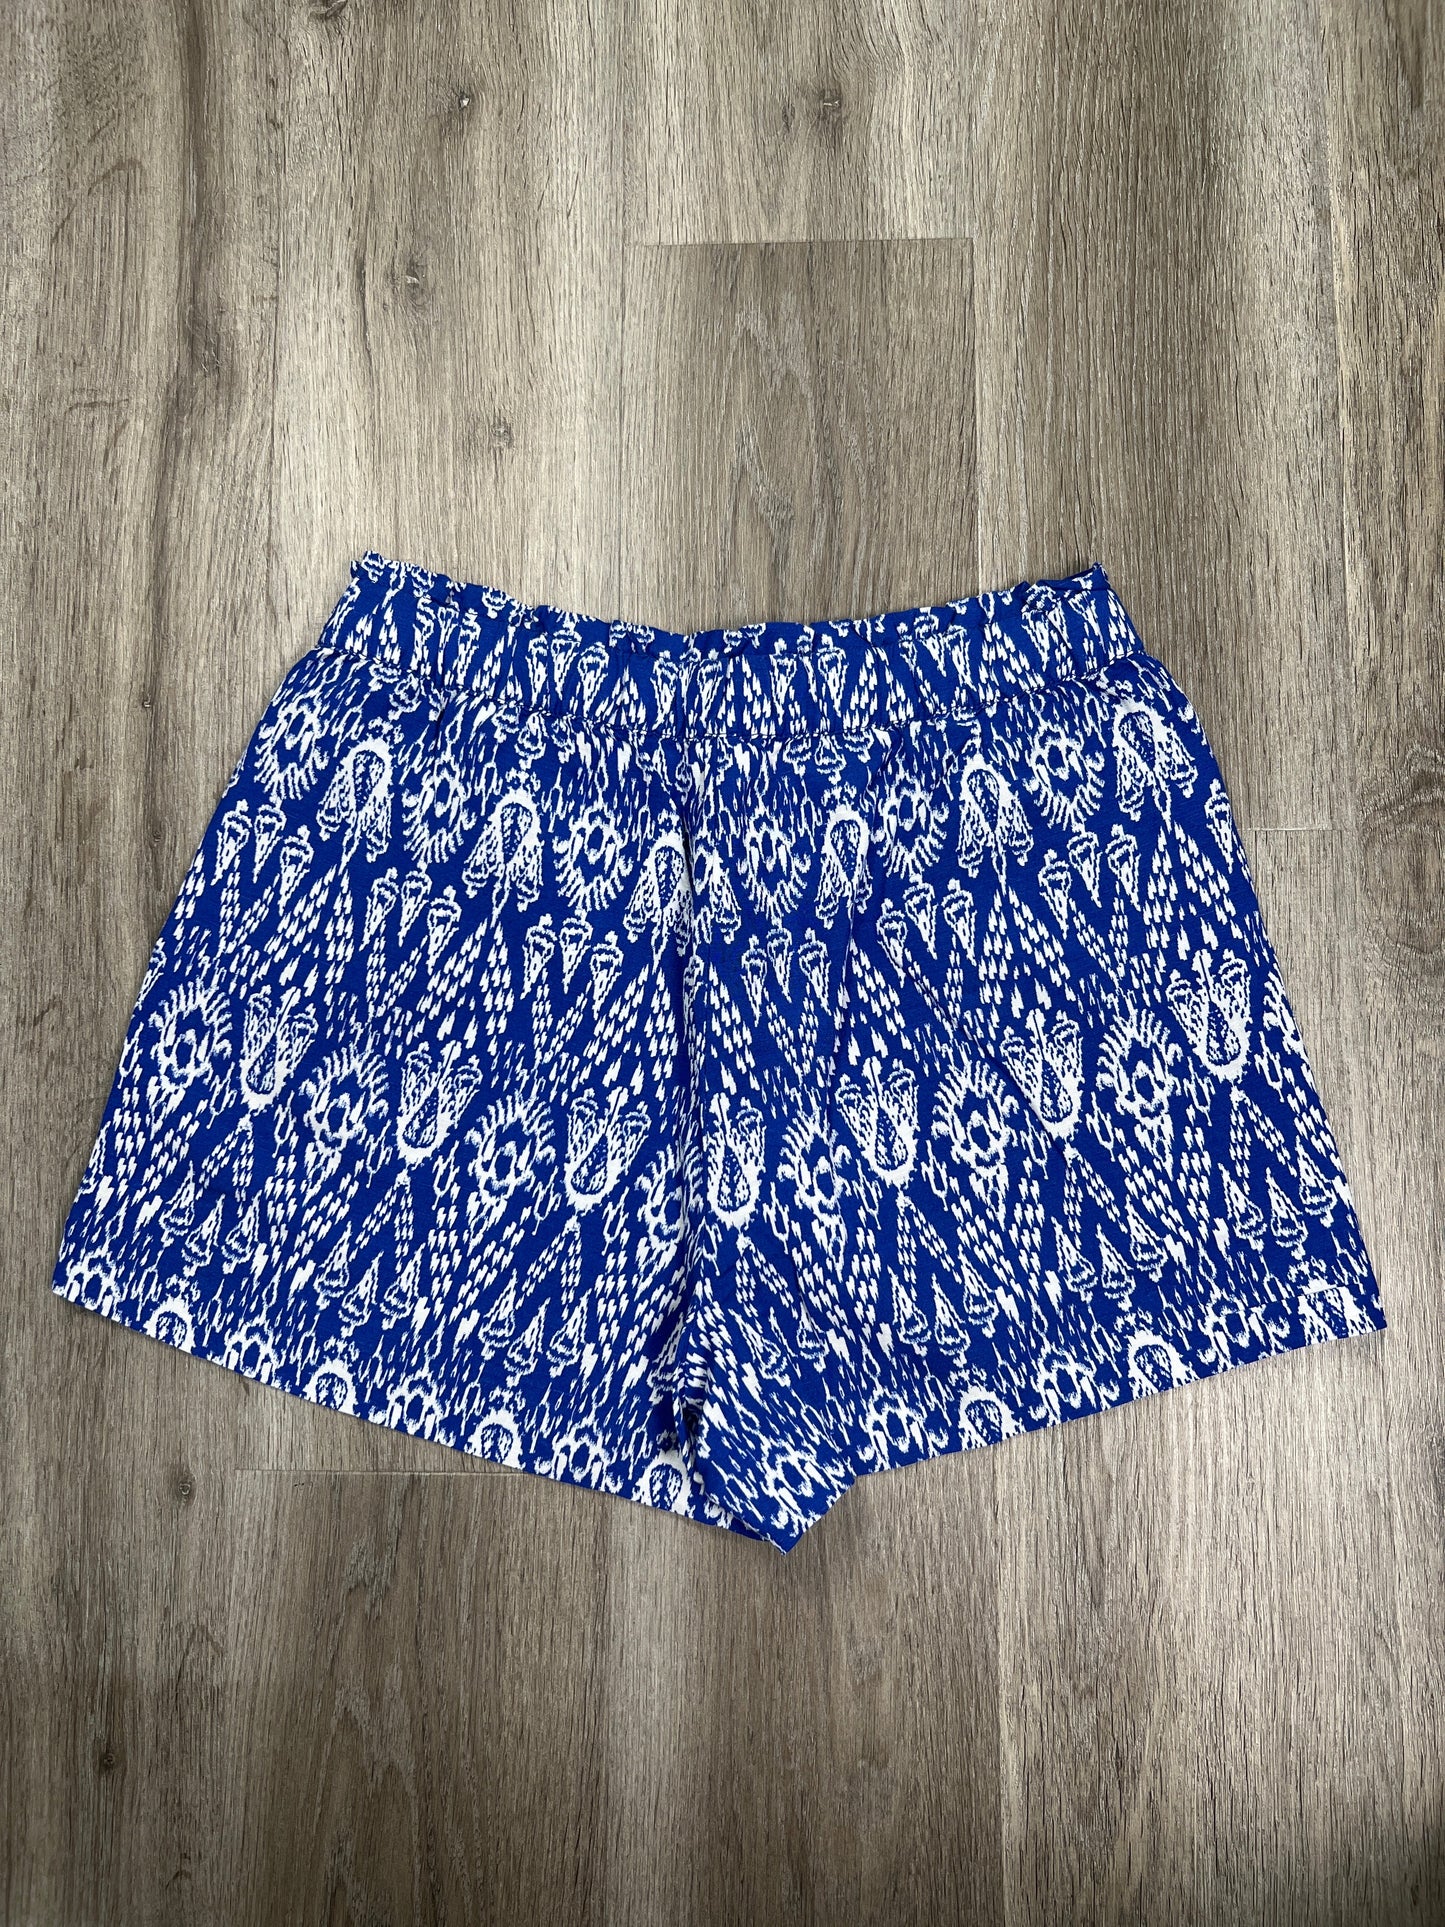 Blue & White Shorts Loft, Size M